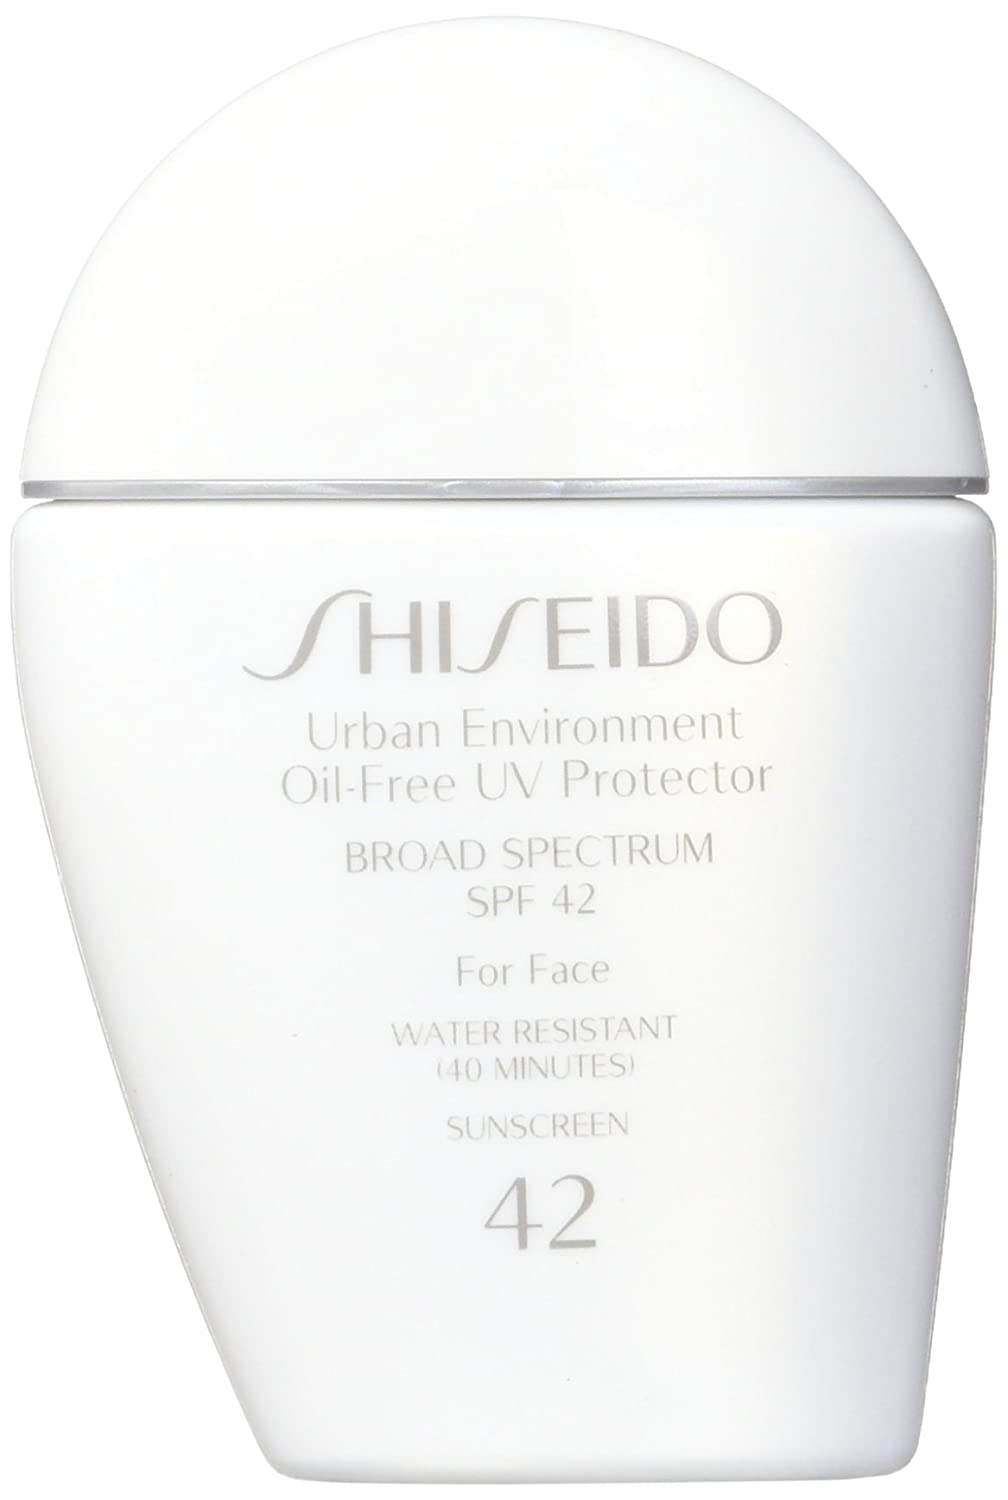 ''Shiseido URBAN Environment Oil-free UV Protector SPF 42 Broad Spectrum for Face, 1 Ounce''